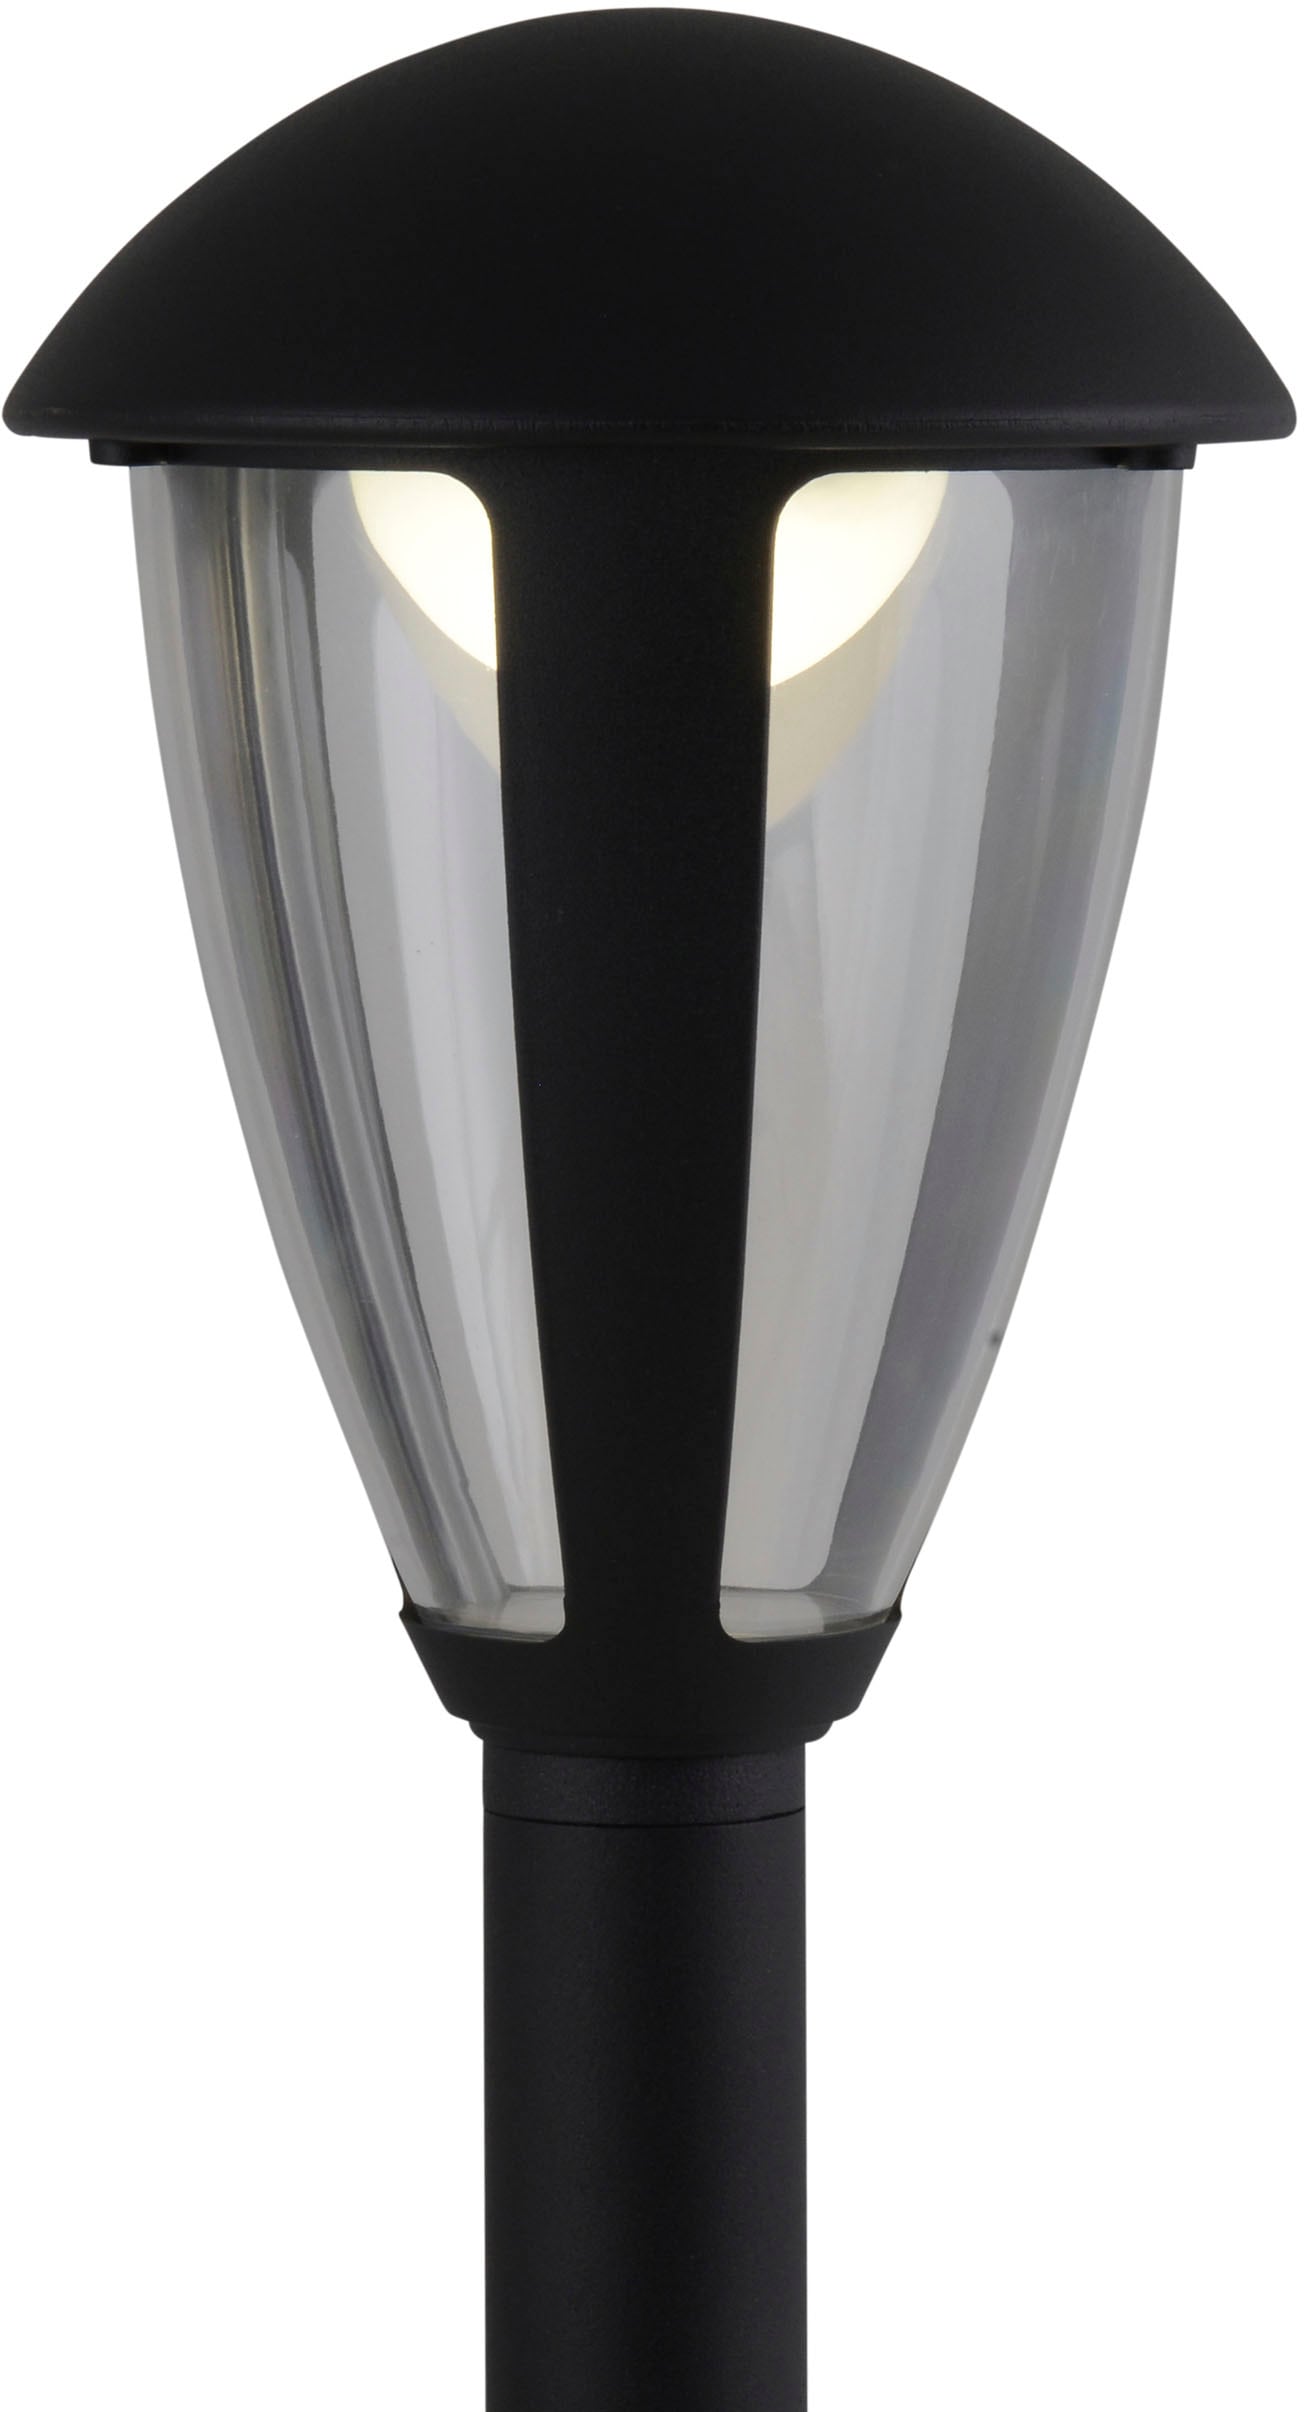 näve LED Außen-Stehlampe »Clint«, 1 flammig, Aluminium schwarz Kunststoff klar incl. 14x LED IP44 Höhe 100cm